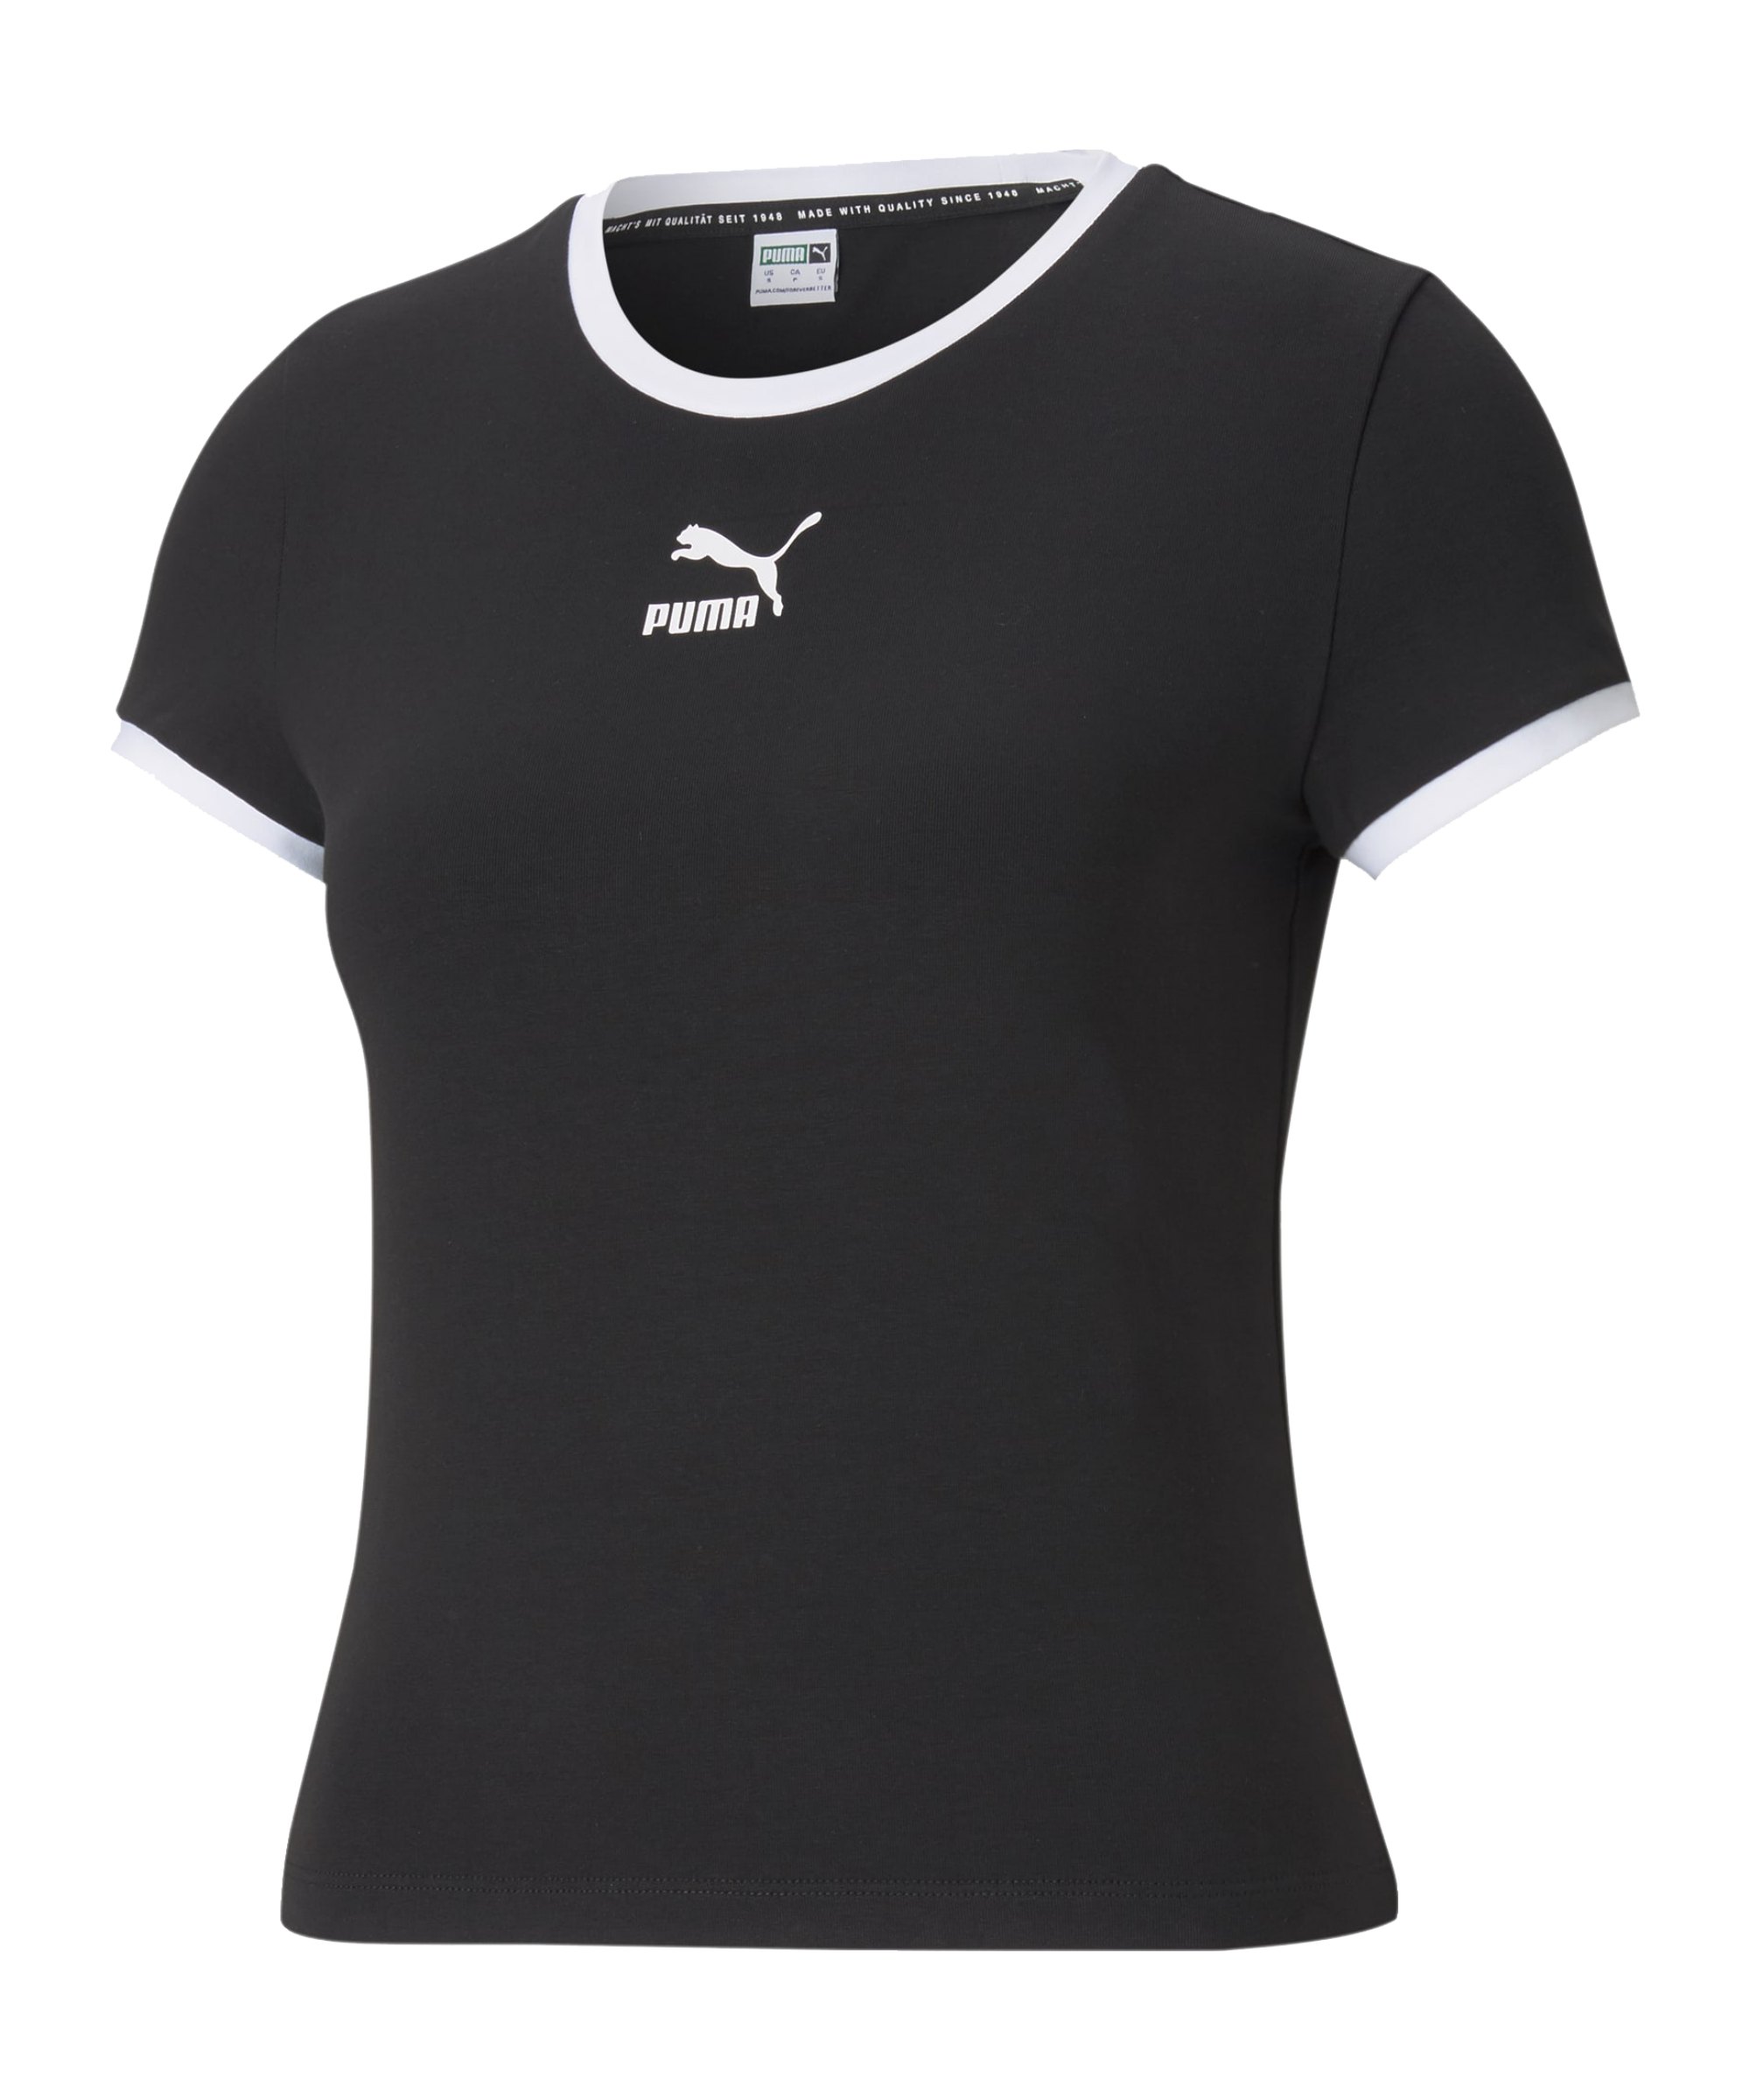 PUMA Classics Fitted T-Shirt Damen Schwarz F01 - schwarz